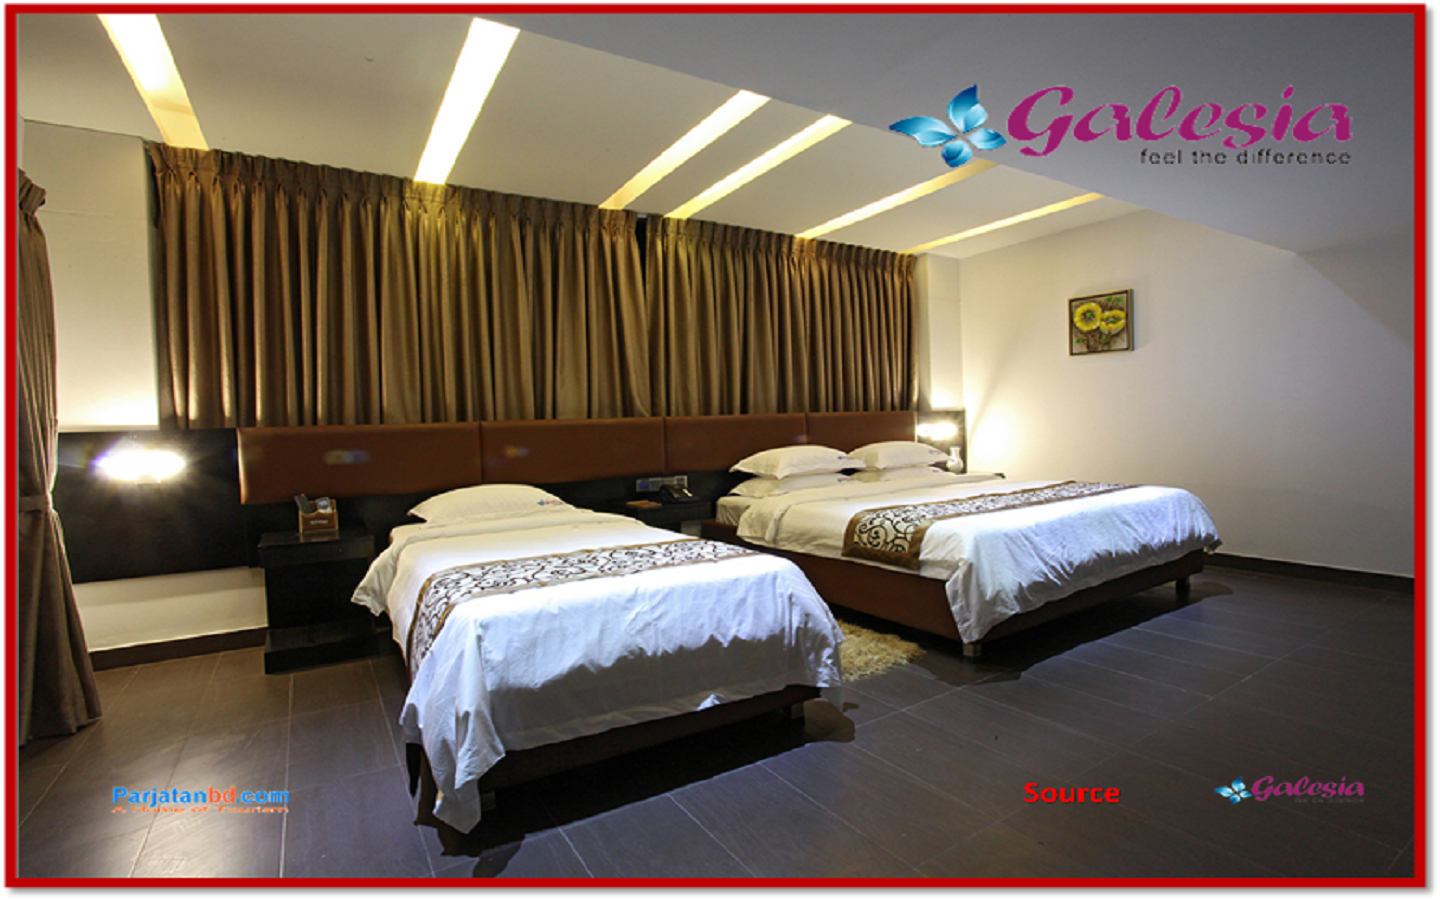 Room Galesia Suite -1, Galesia Hotel & Resort ltd., Banani